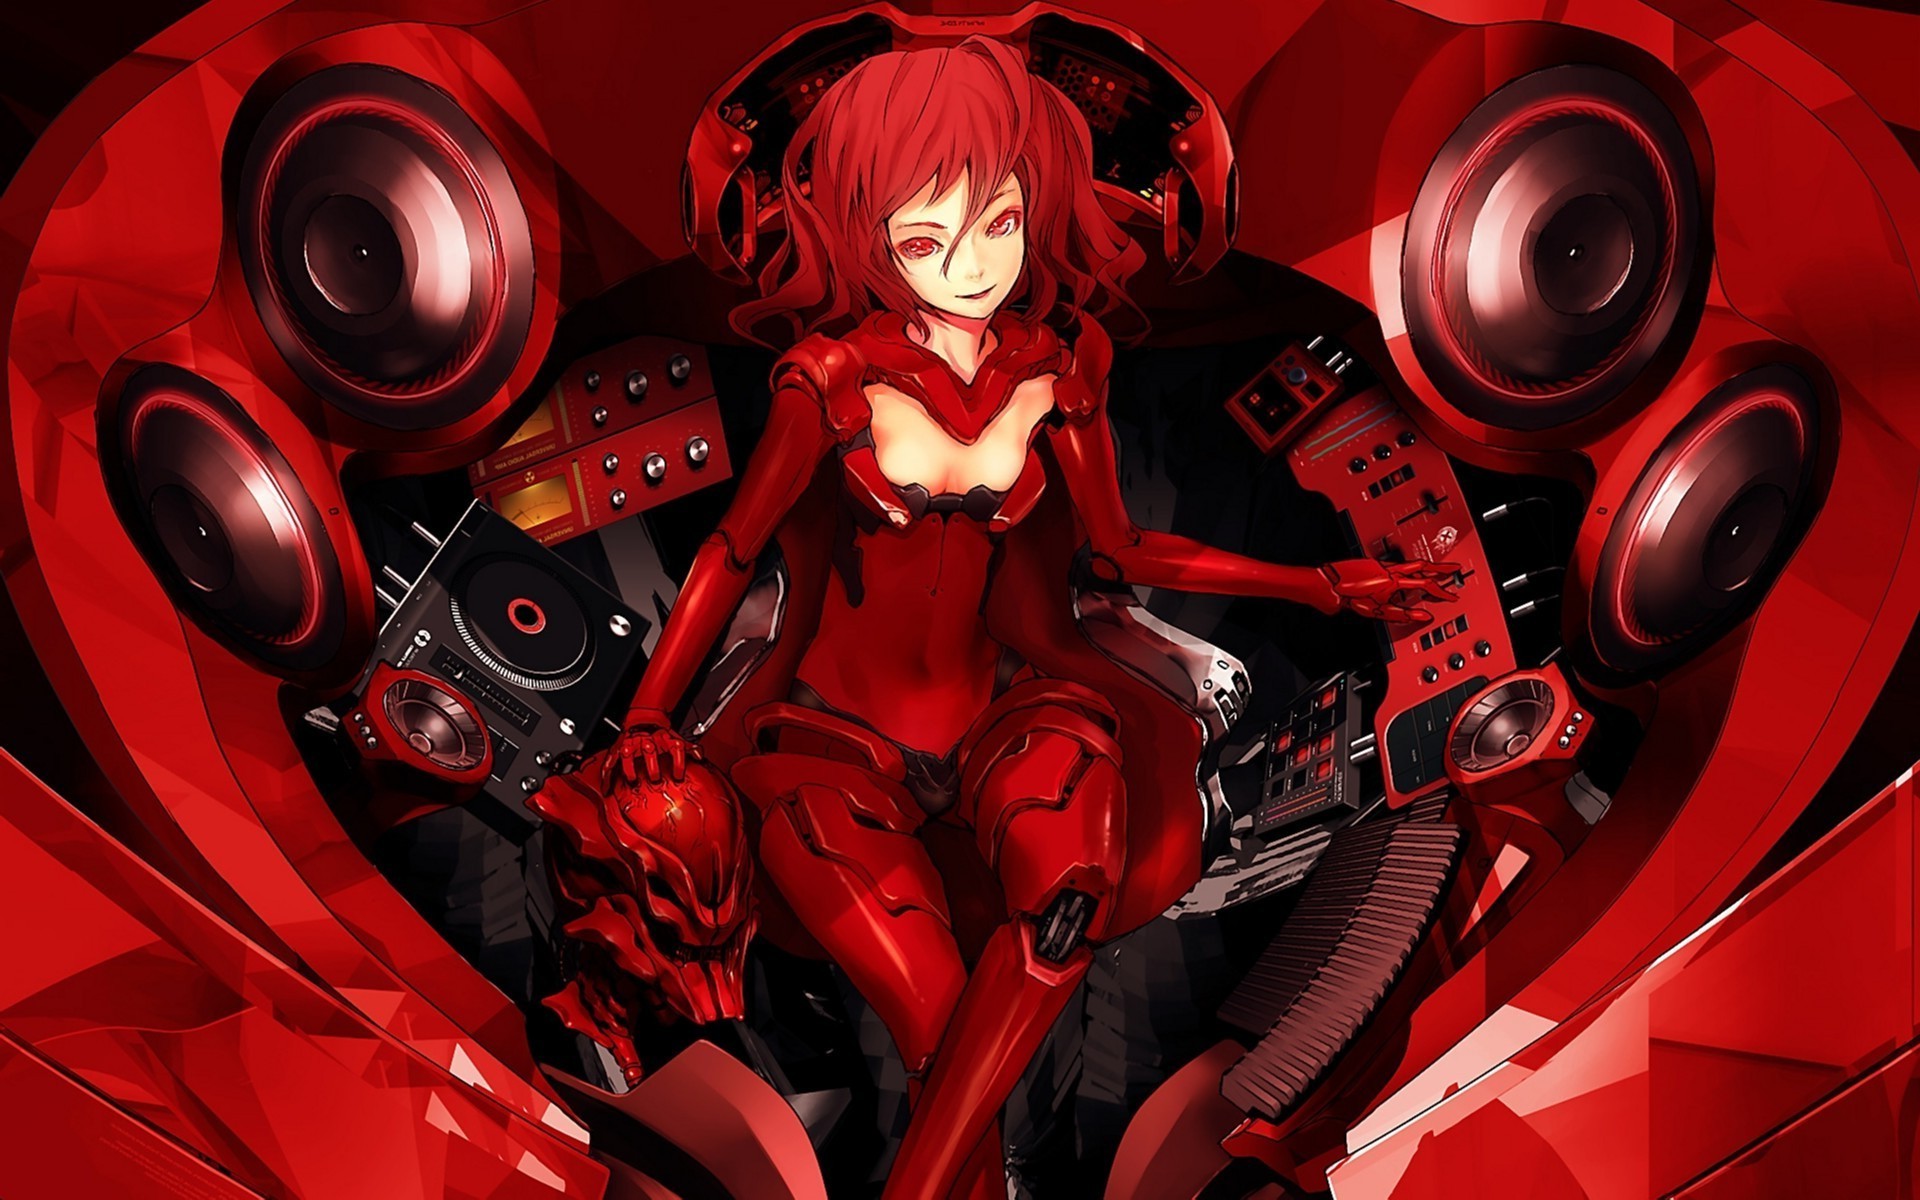 108986-artwork-fantasy_art-anime-cyborg-music-speakers-disc_jockey-red-redhead-Redjuice-original_characters.jpg